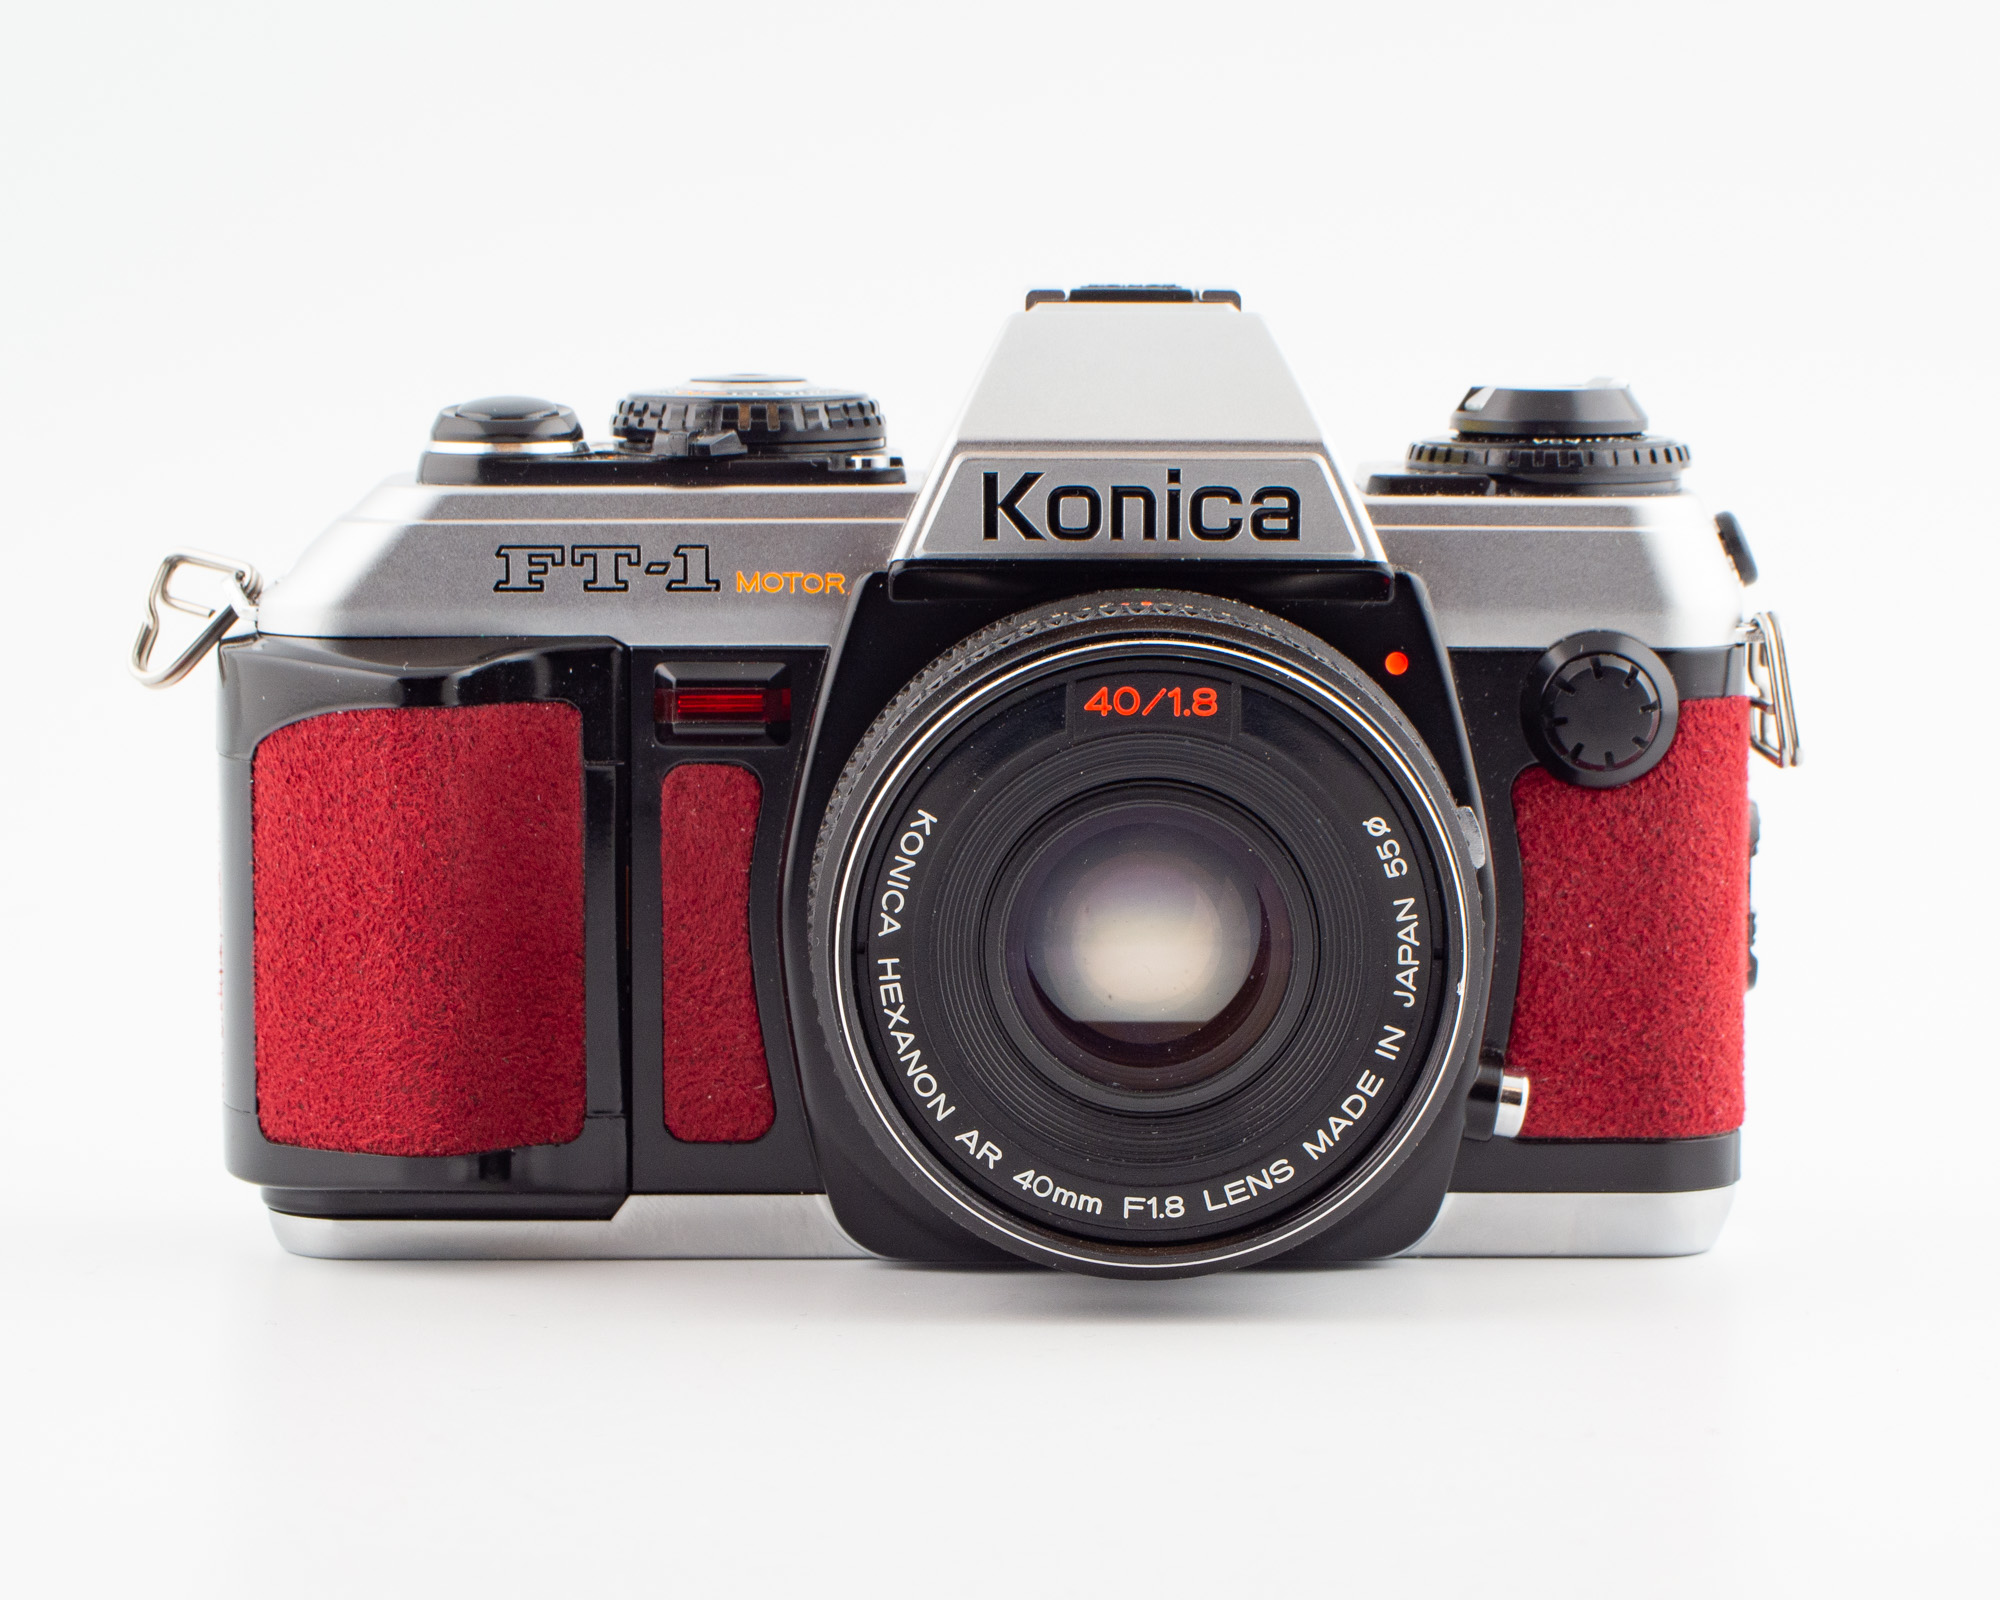 Fotohistoria: Konica FT-1 Motor | CyberPhoto